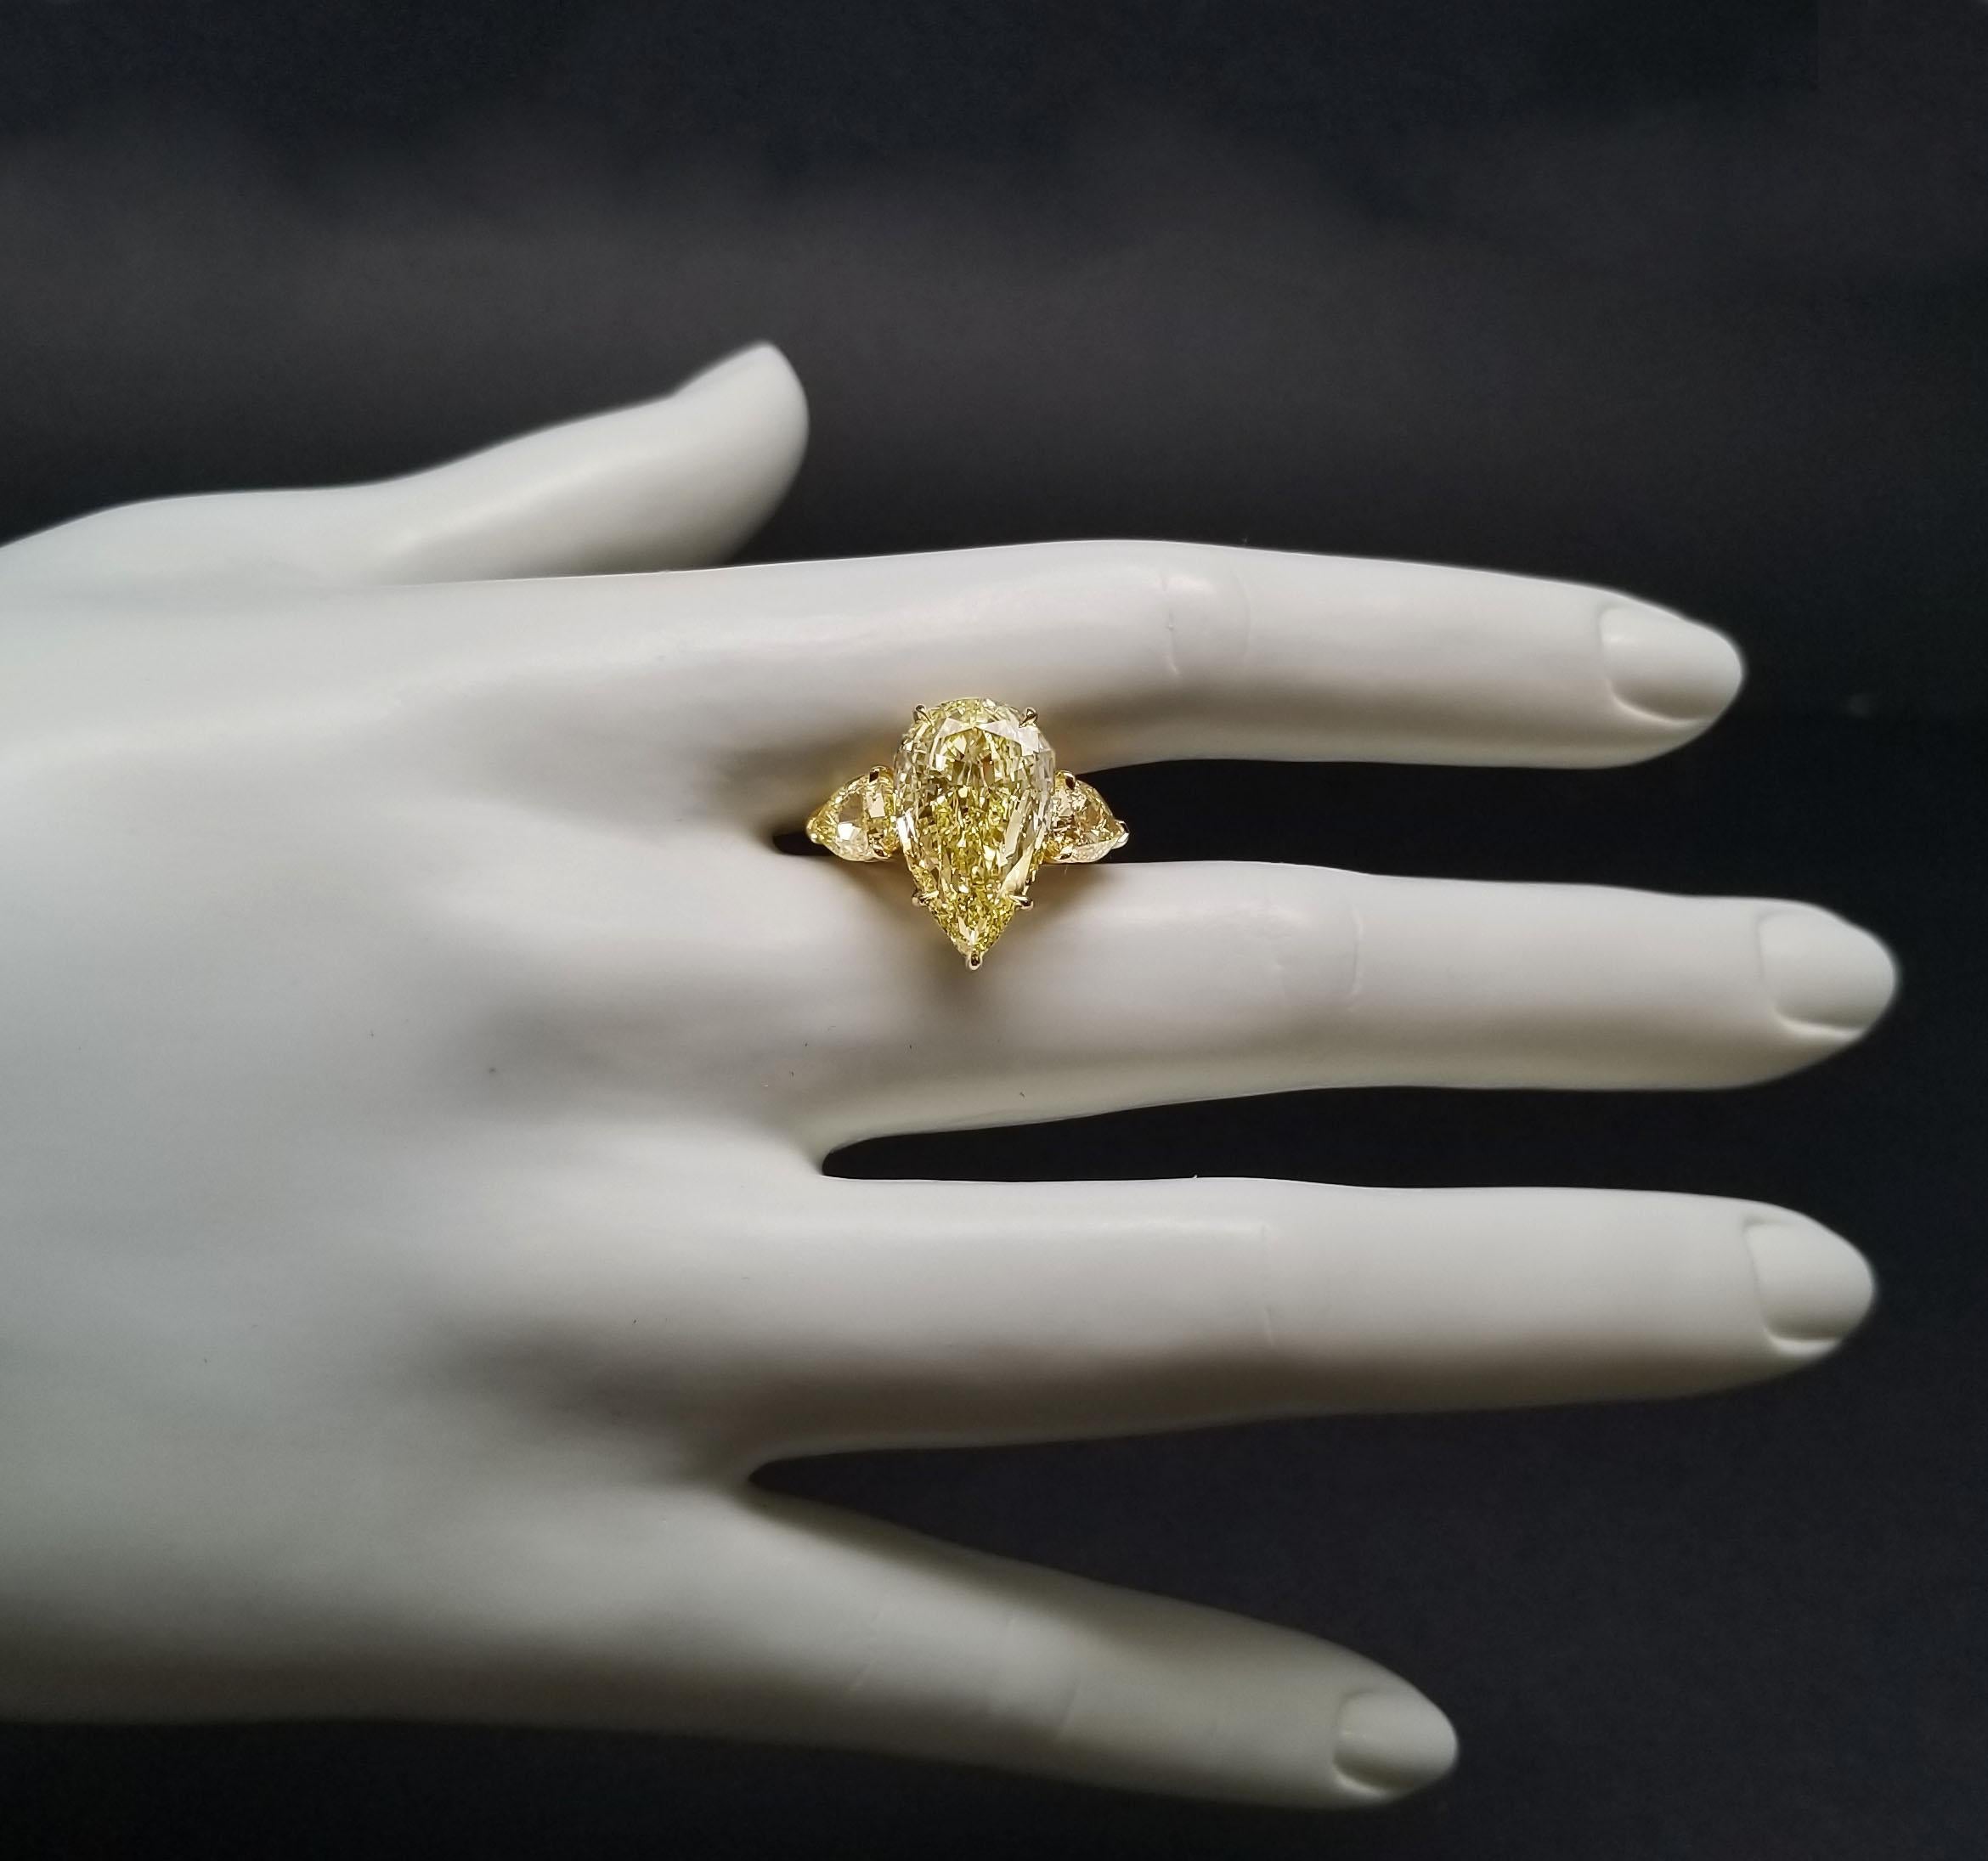 6 carat pear shaped diamond ring